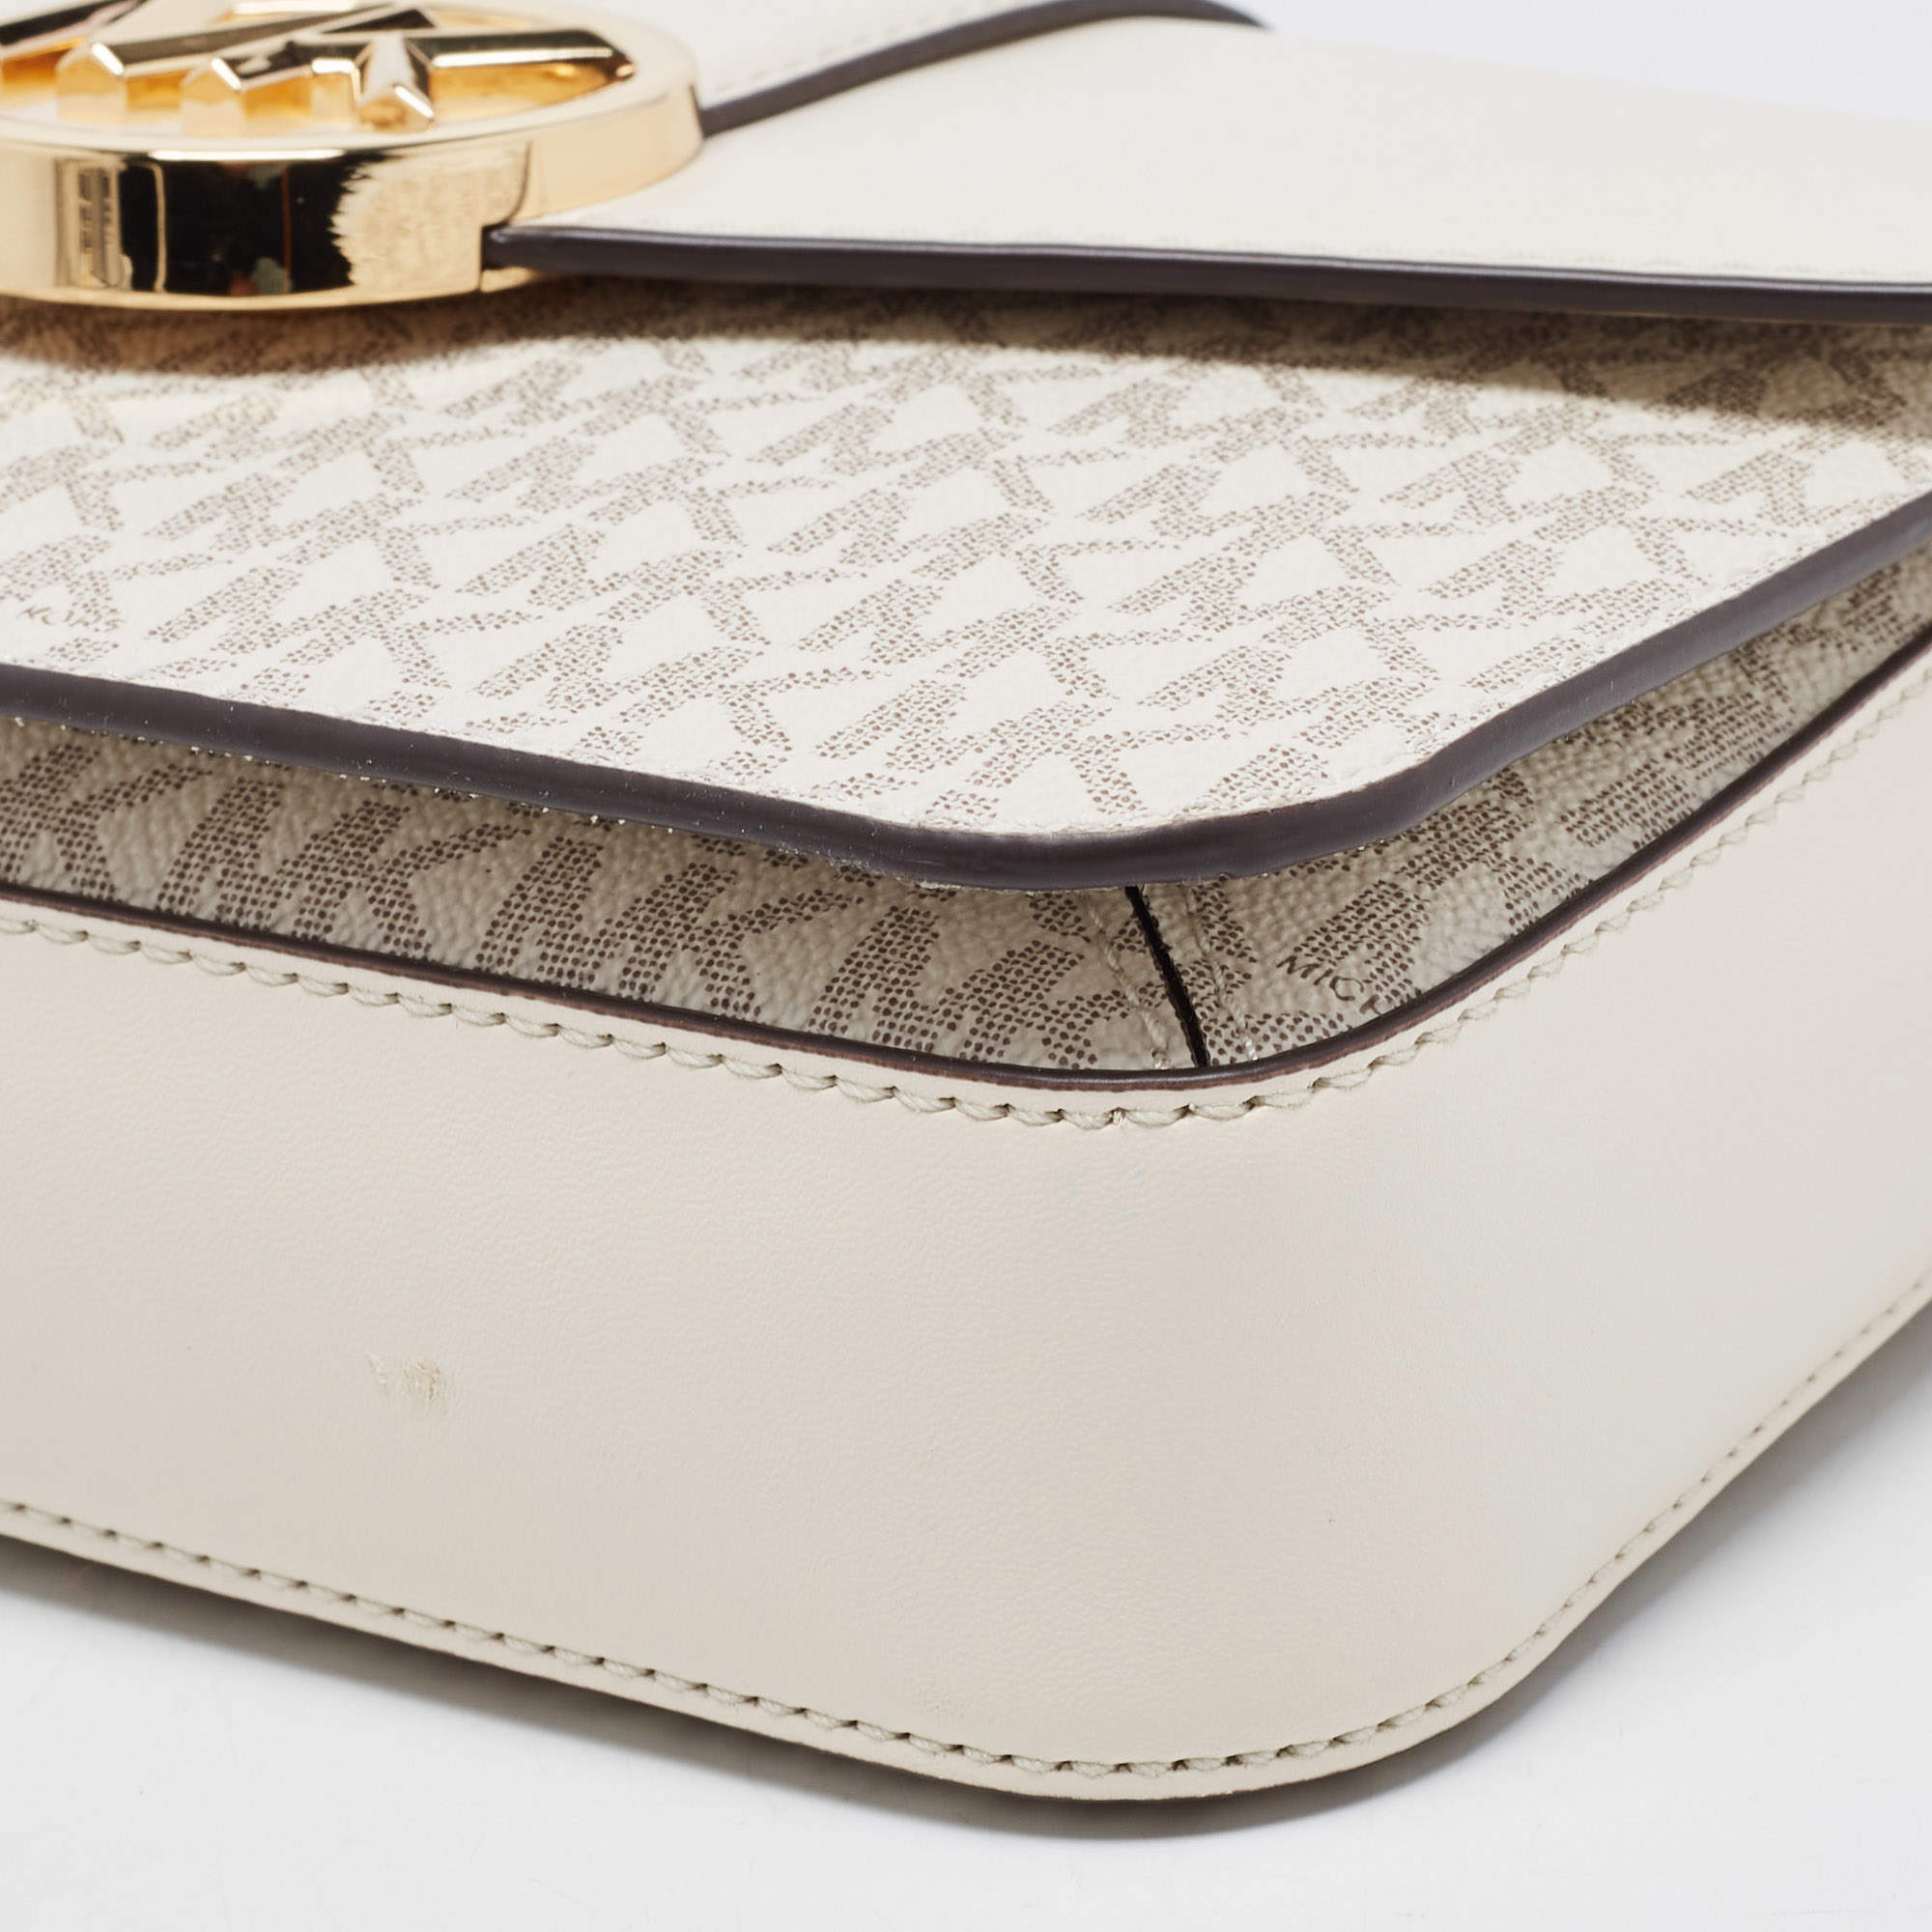 Michael Kors Guitar Crossbody Bags